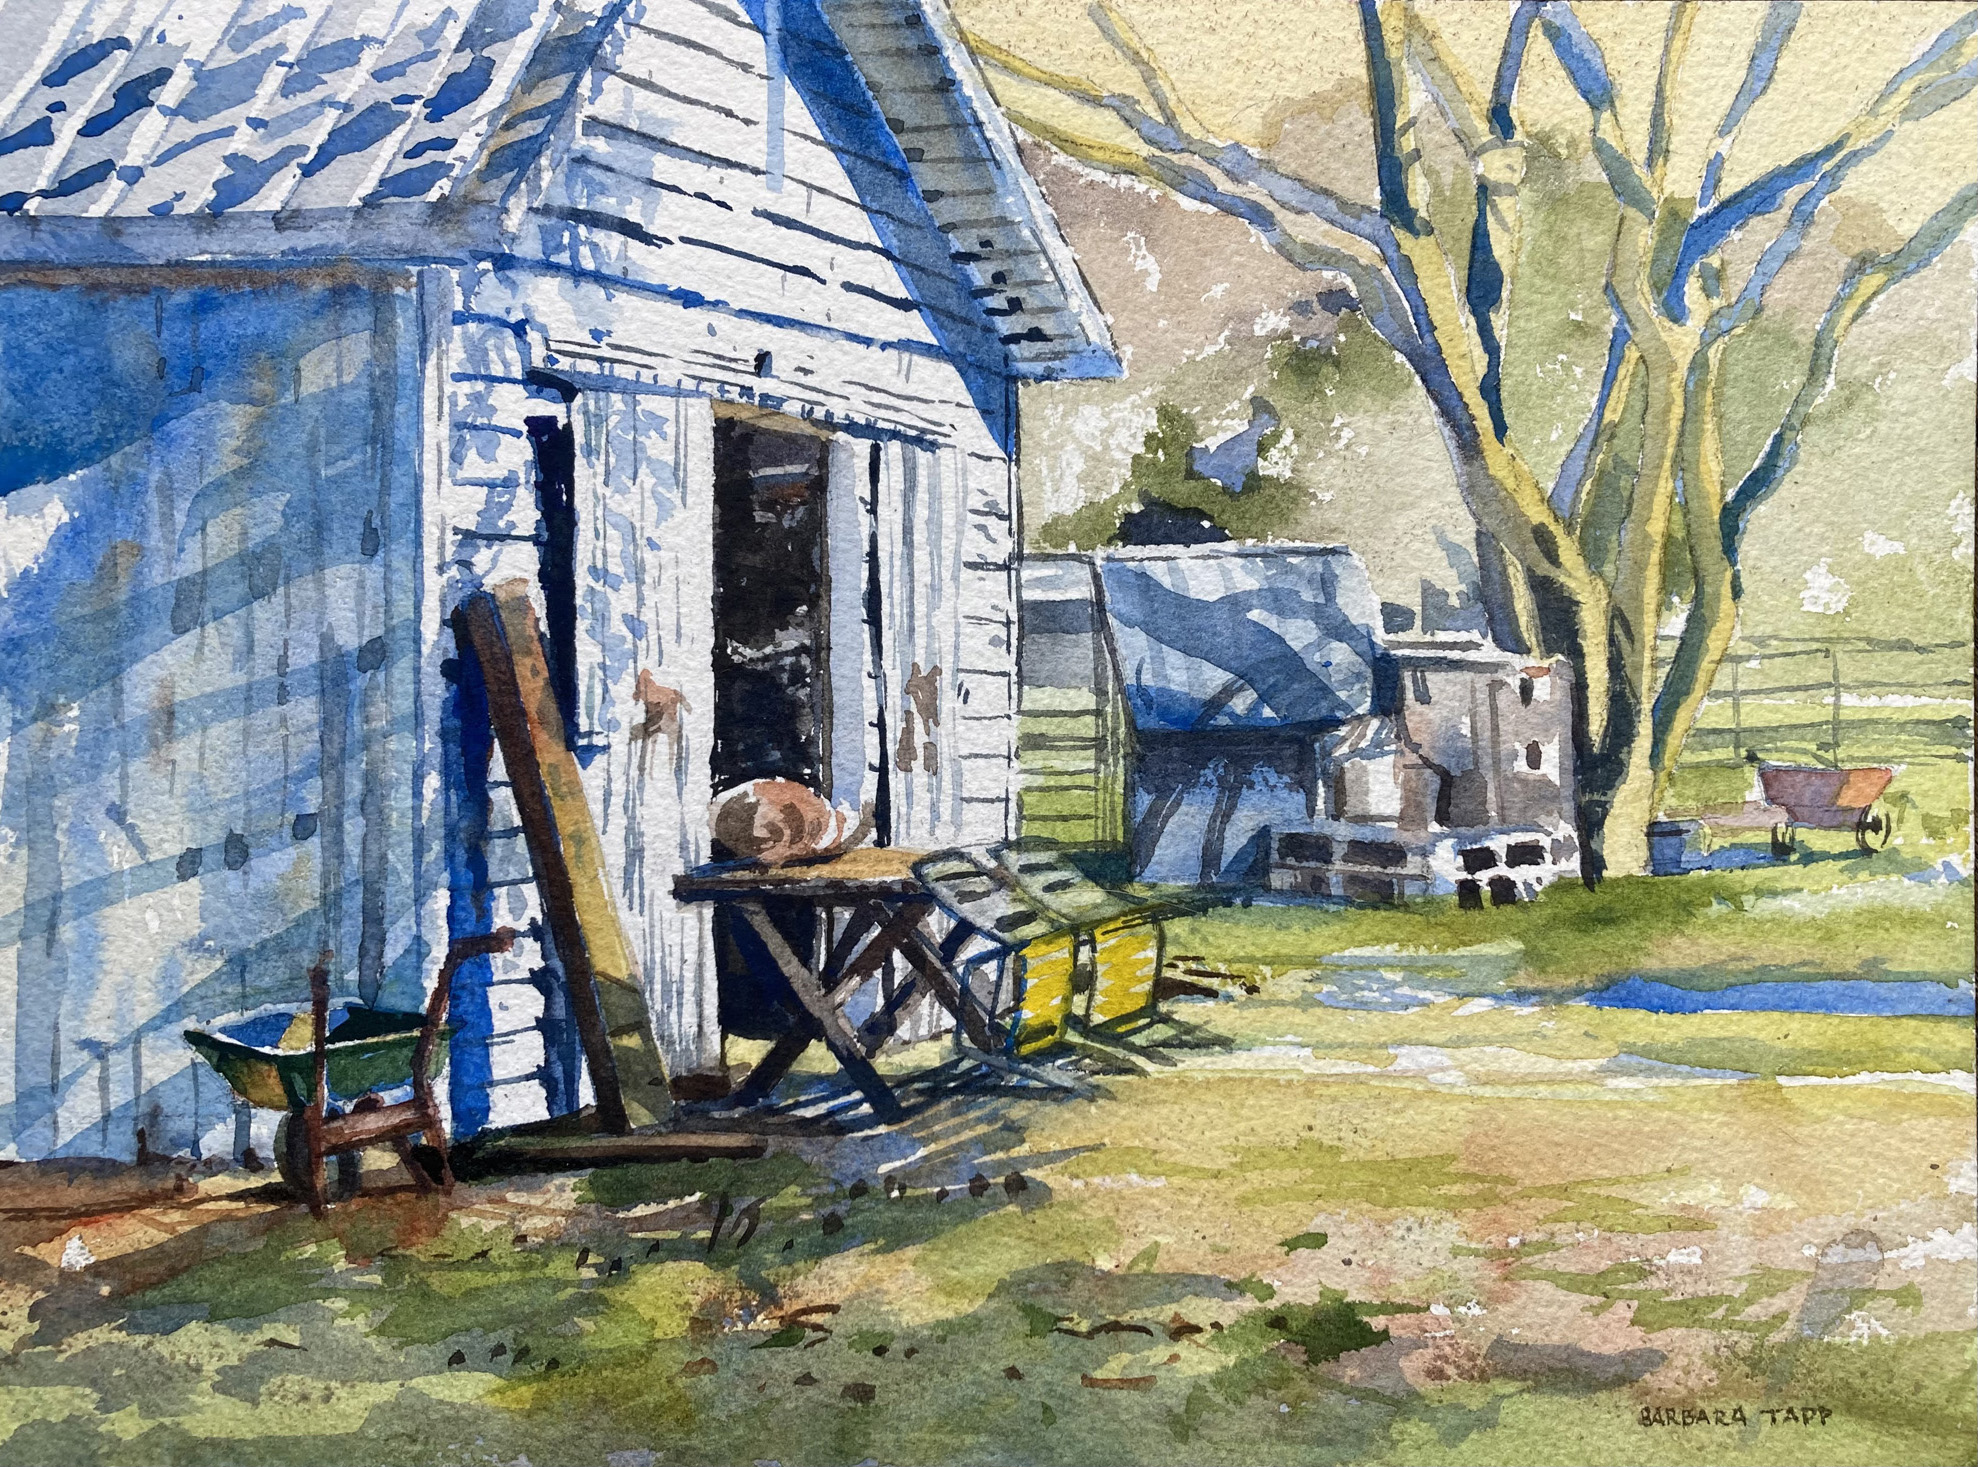 "The Farmer’s Backyard," by Barbara Tapp